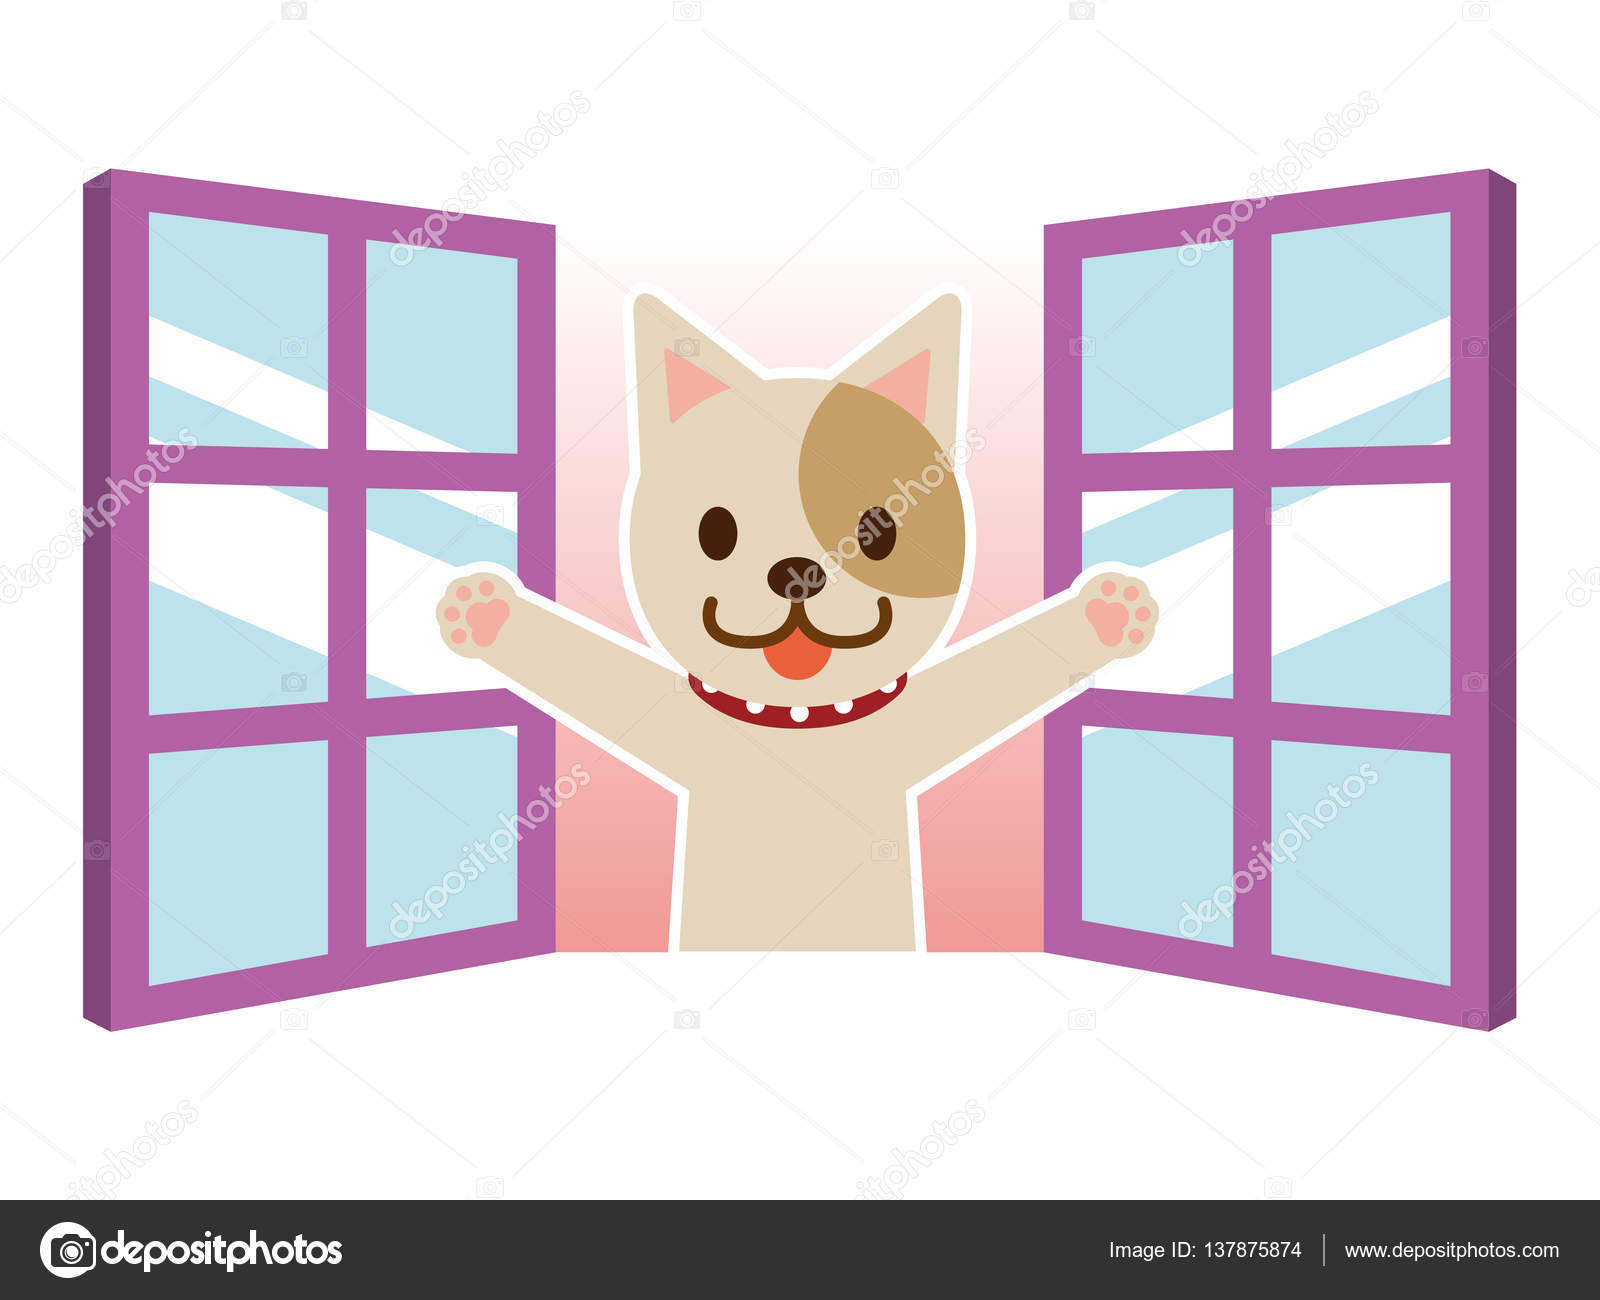 depositphotos_137875874 stock illustration dog to open the window